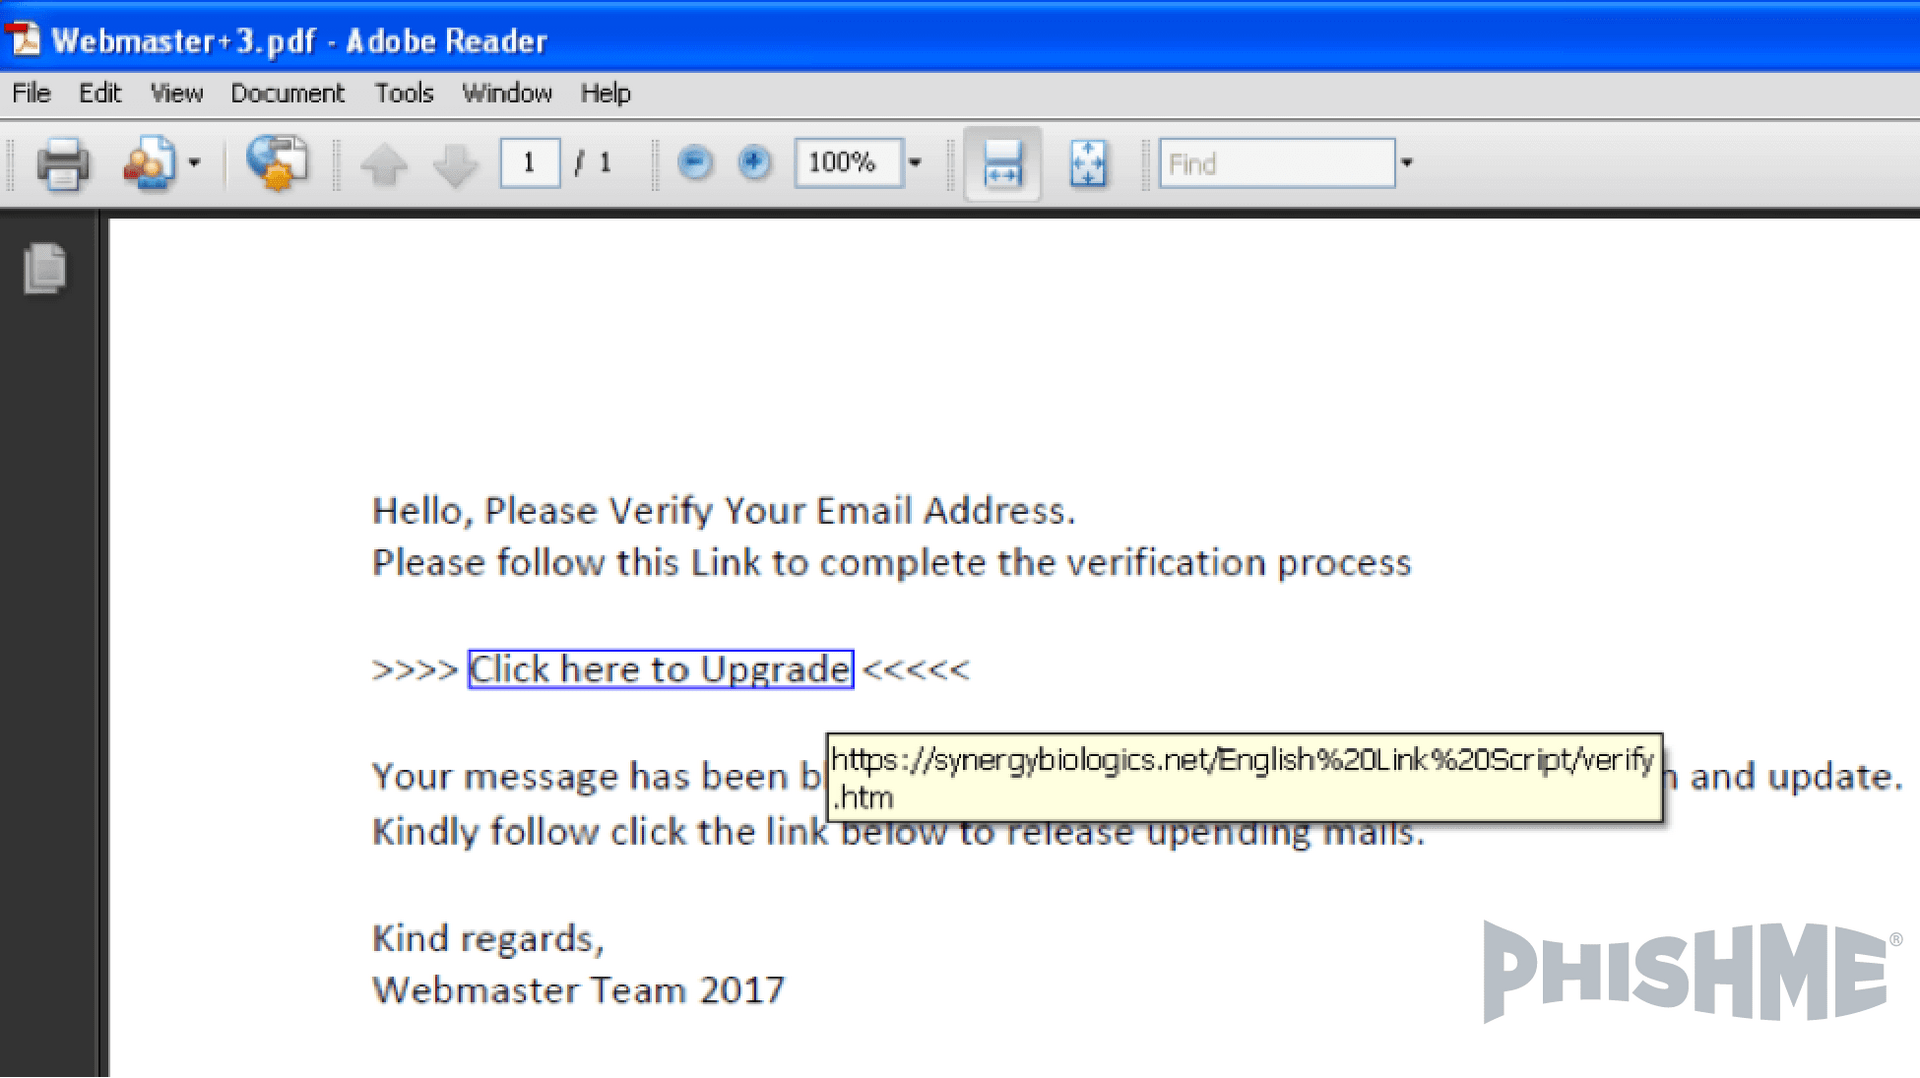 Phishing email examples - Cofense